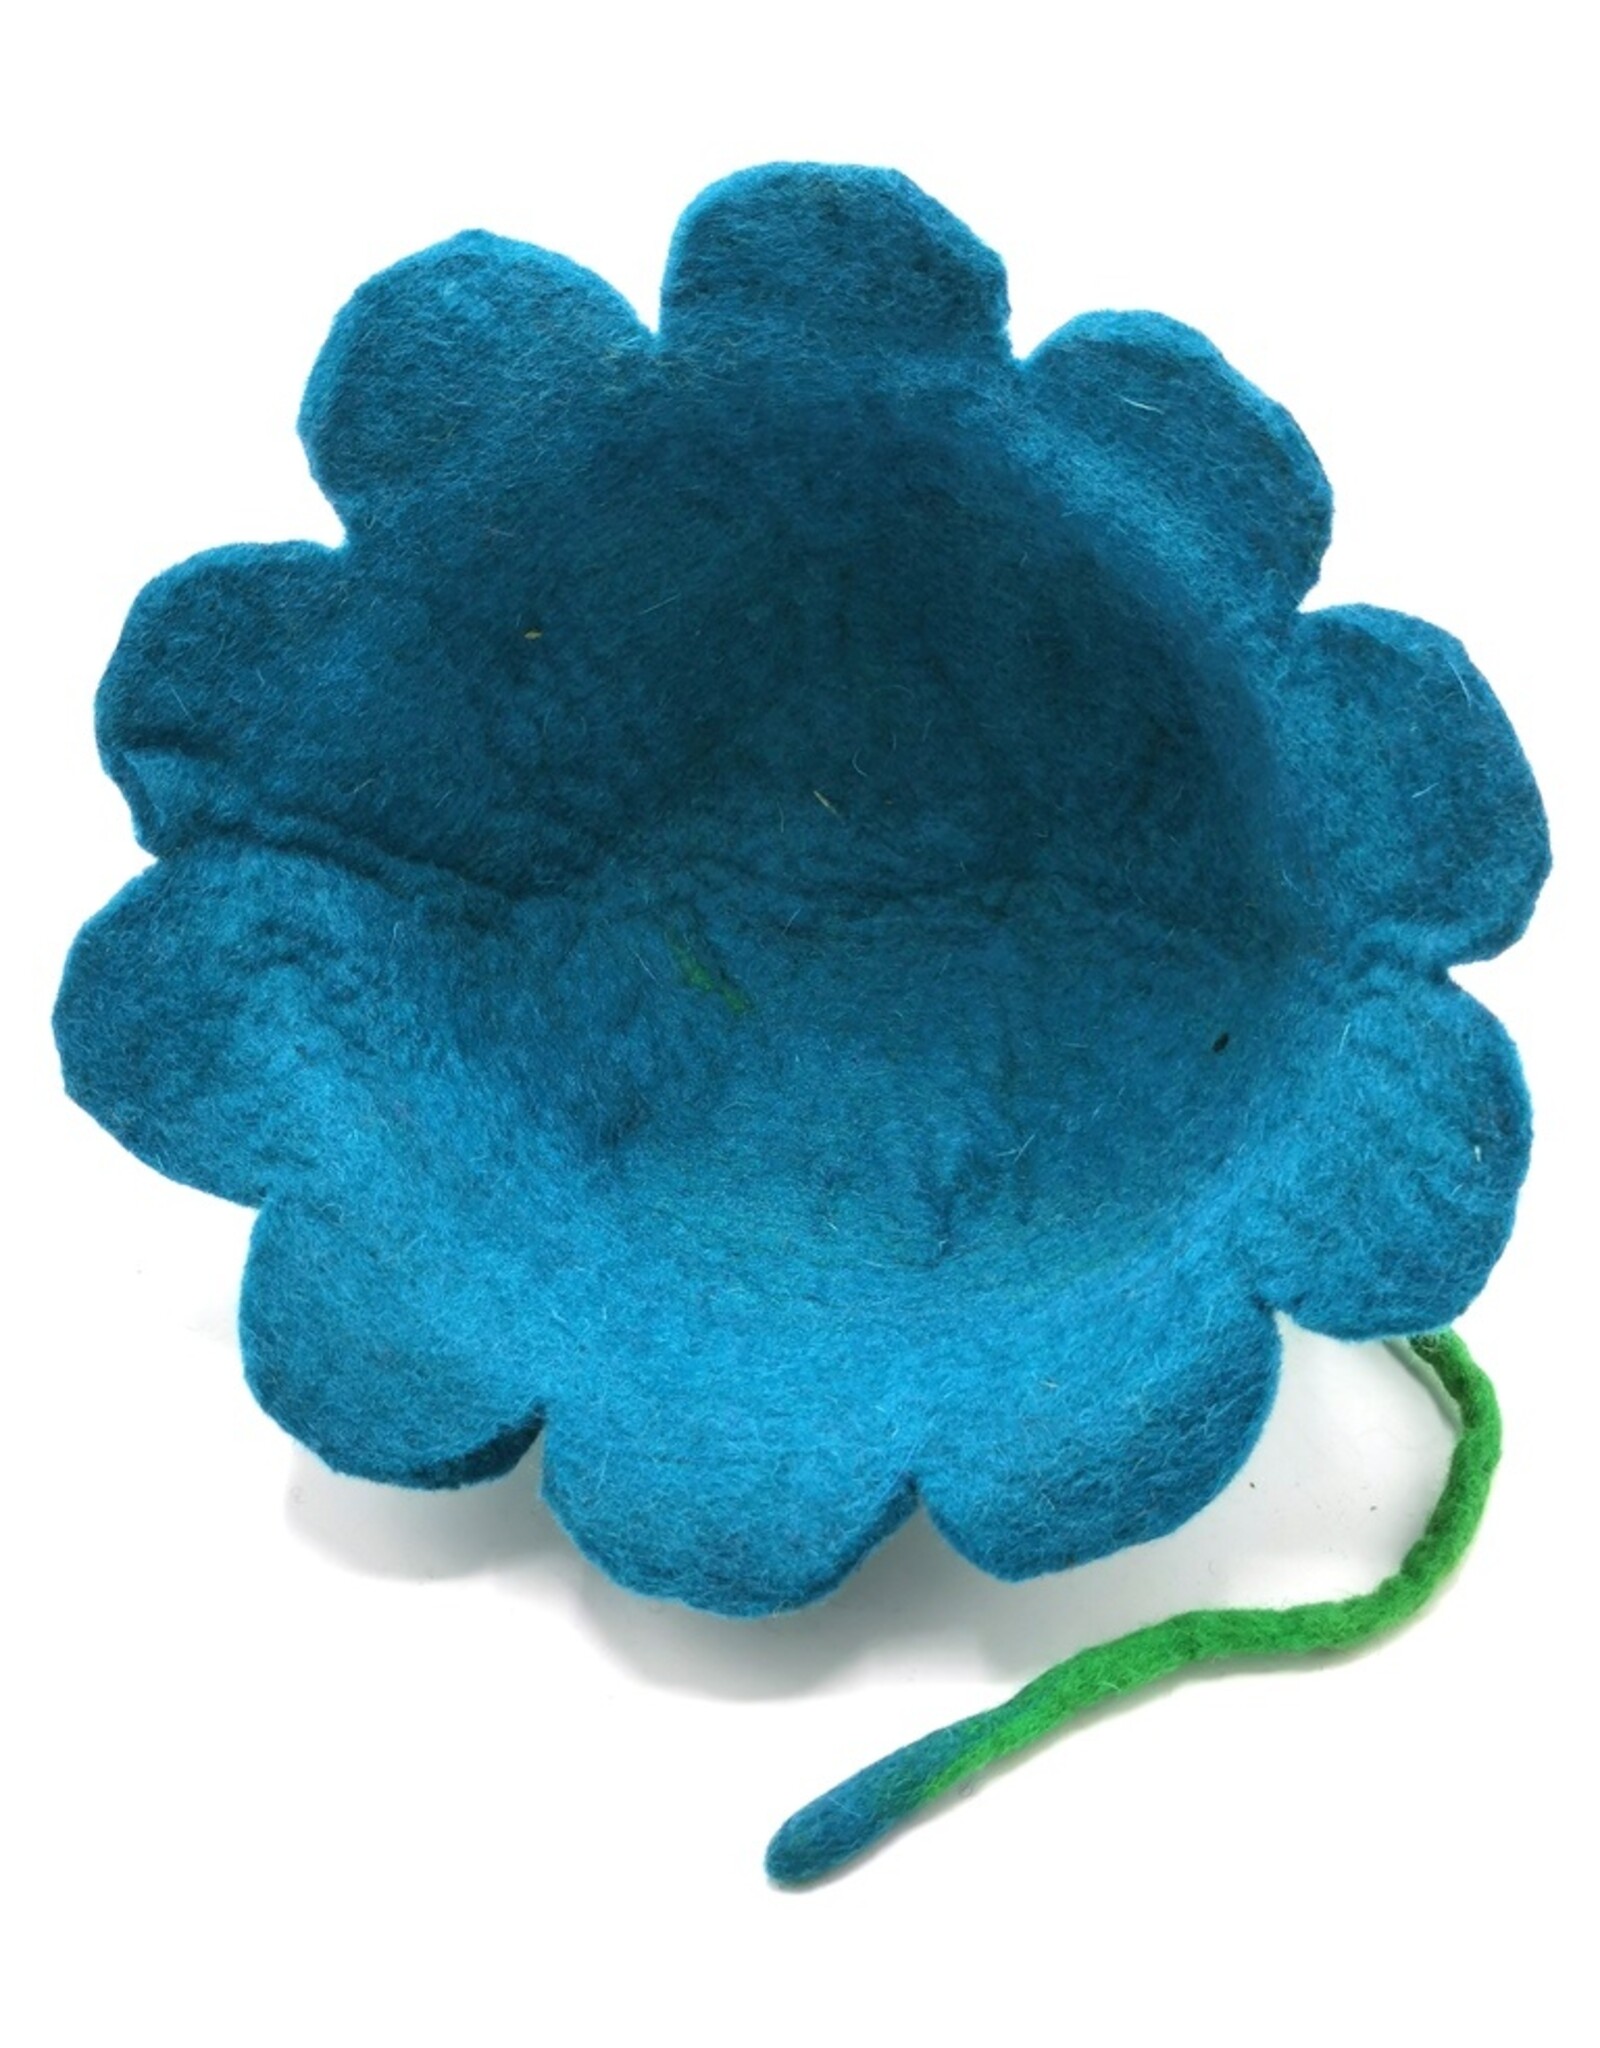 Trukado Miscellaneous - Vilten hoed Bloem Turquoise